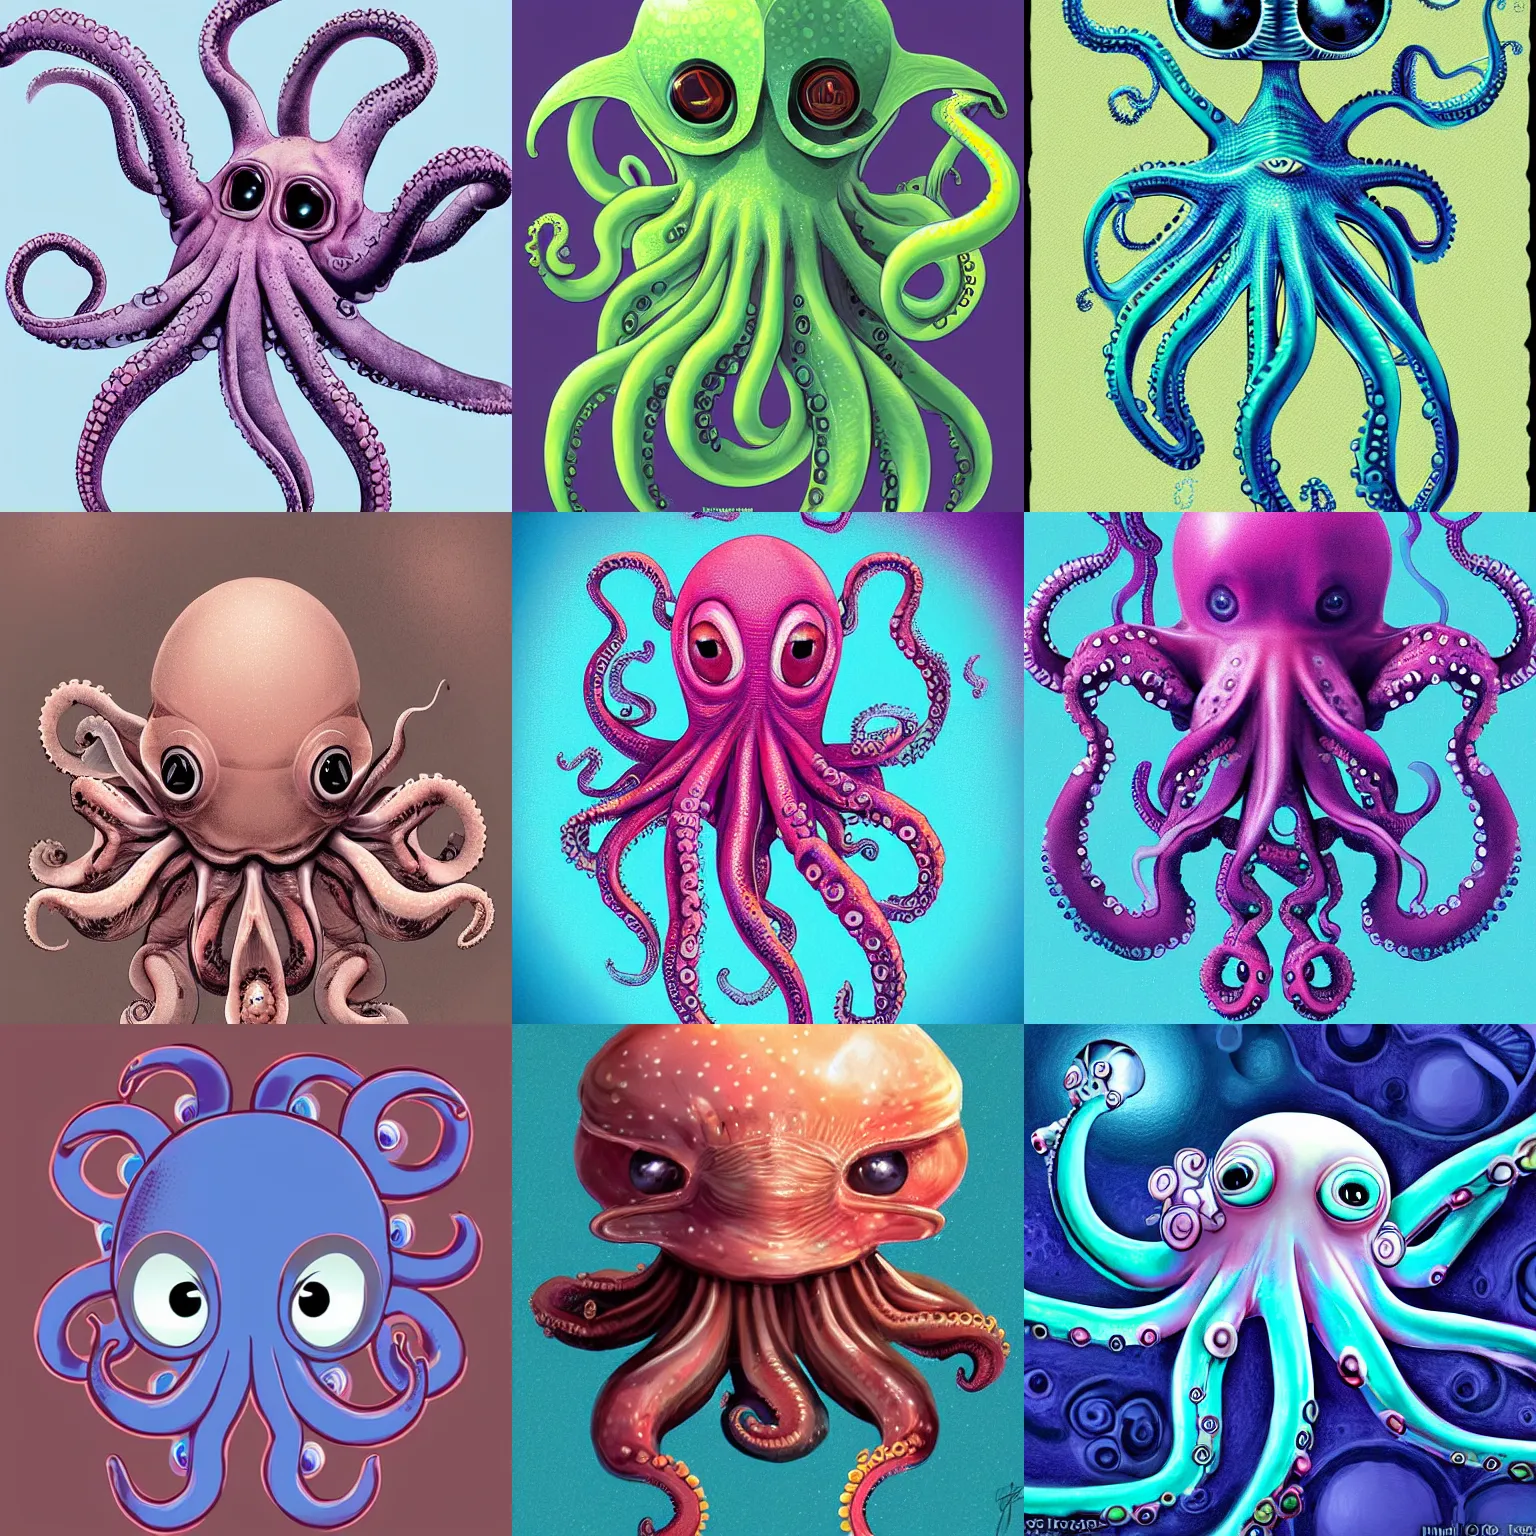 Prompt: a very cute alien baby octopus, digital art, hyper detailed